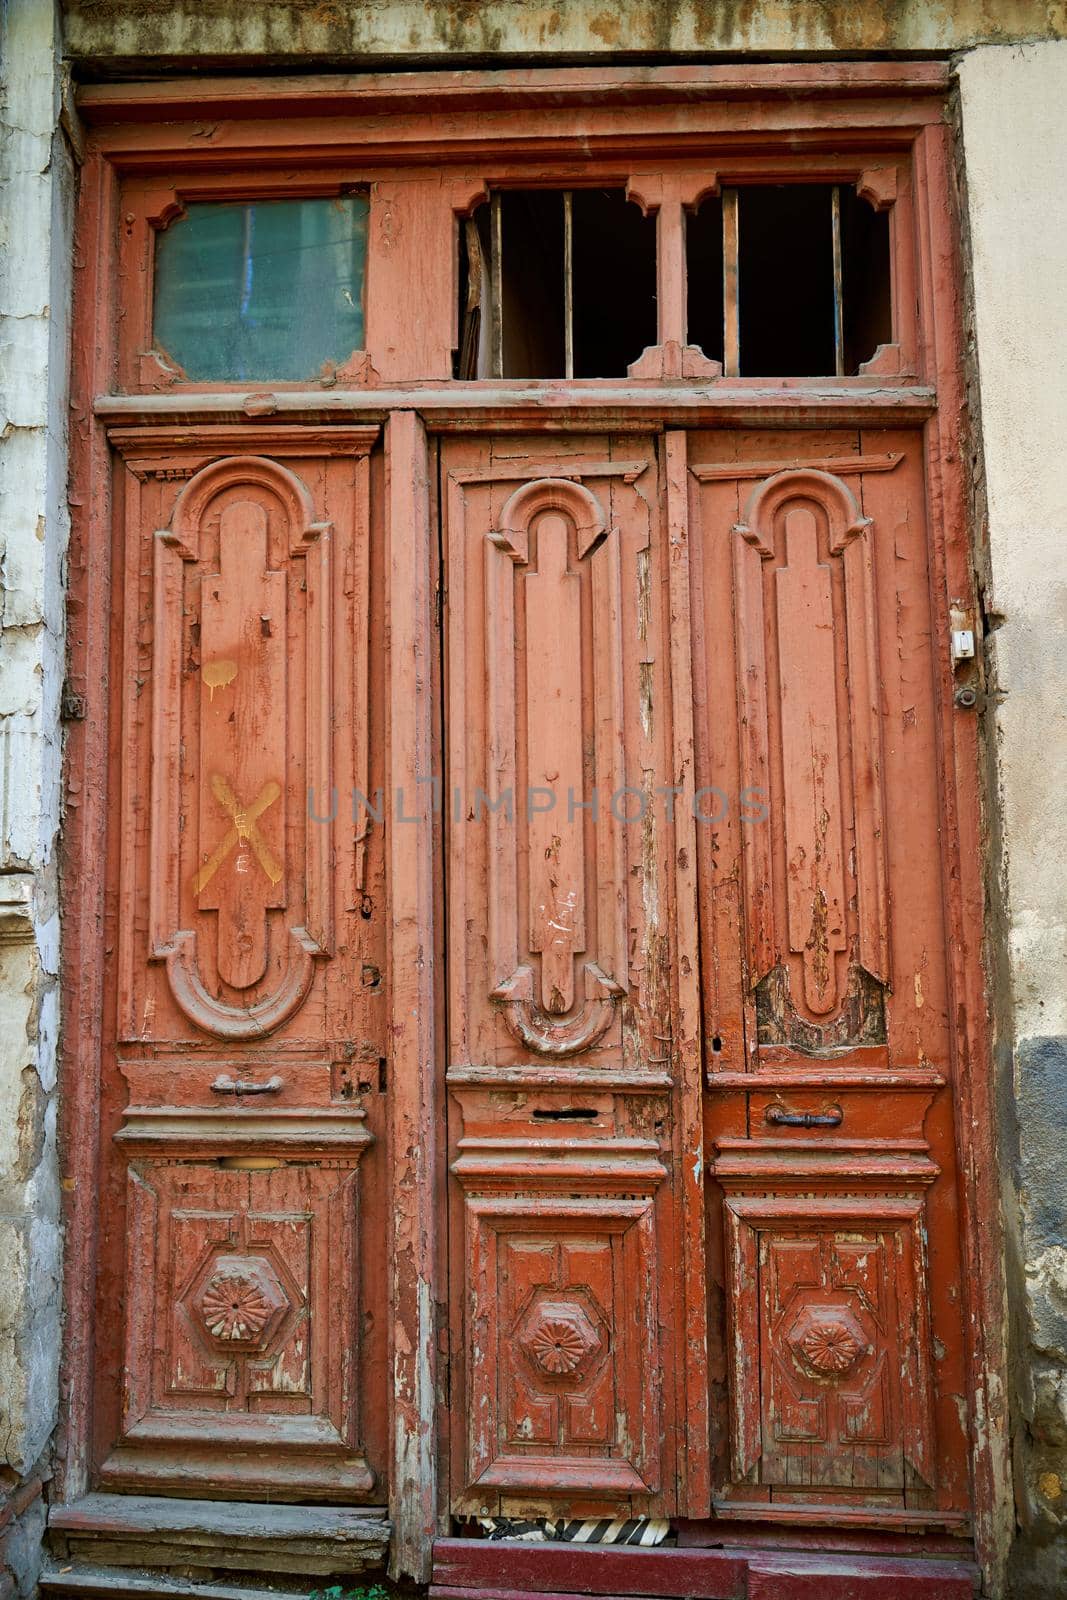 Atmospheric vintage wooden entrance doors. Retro style.